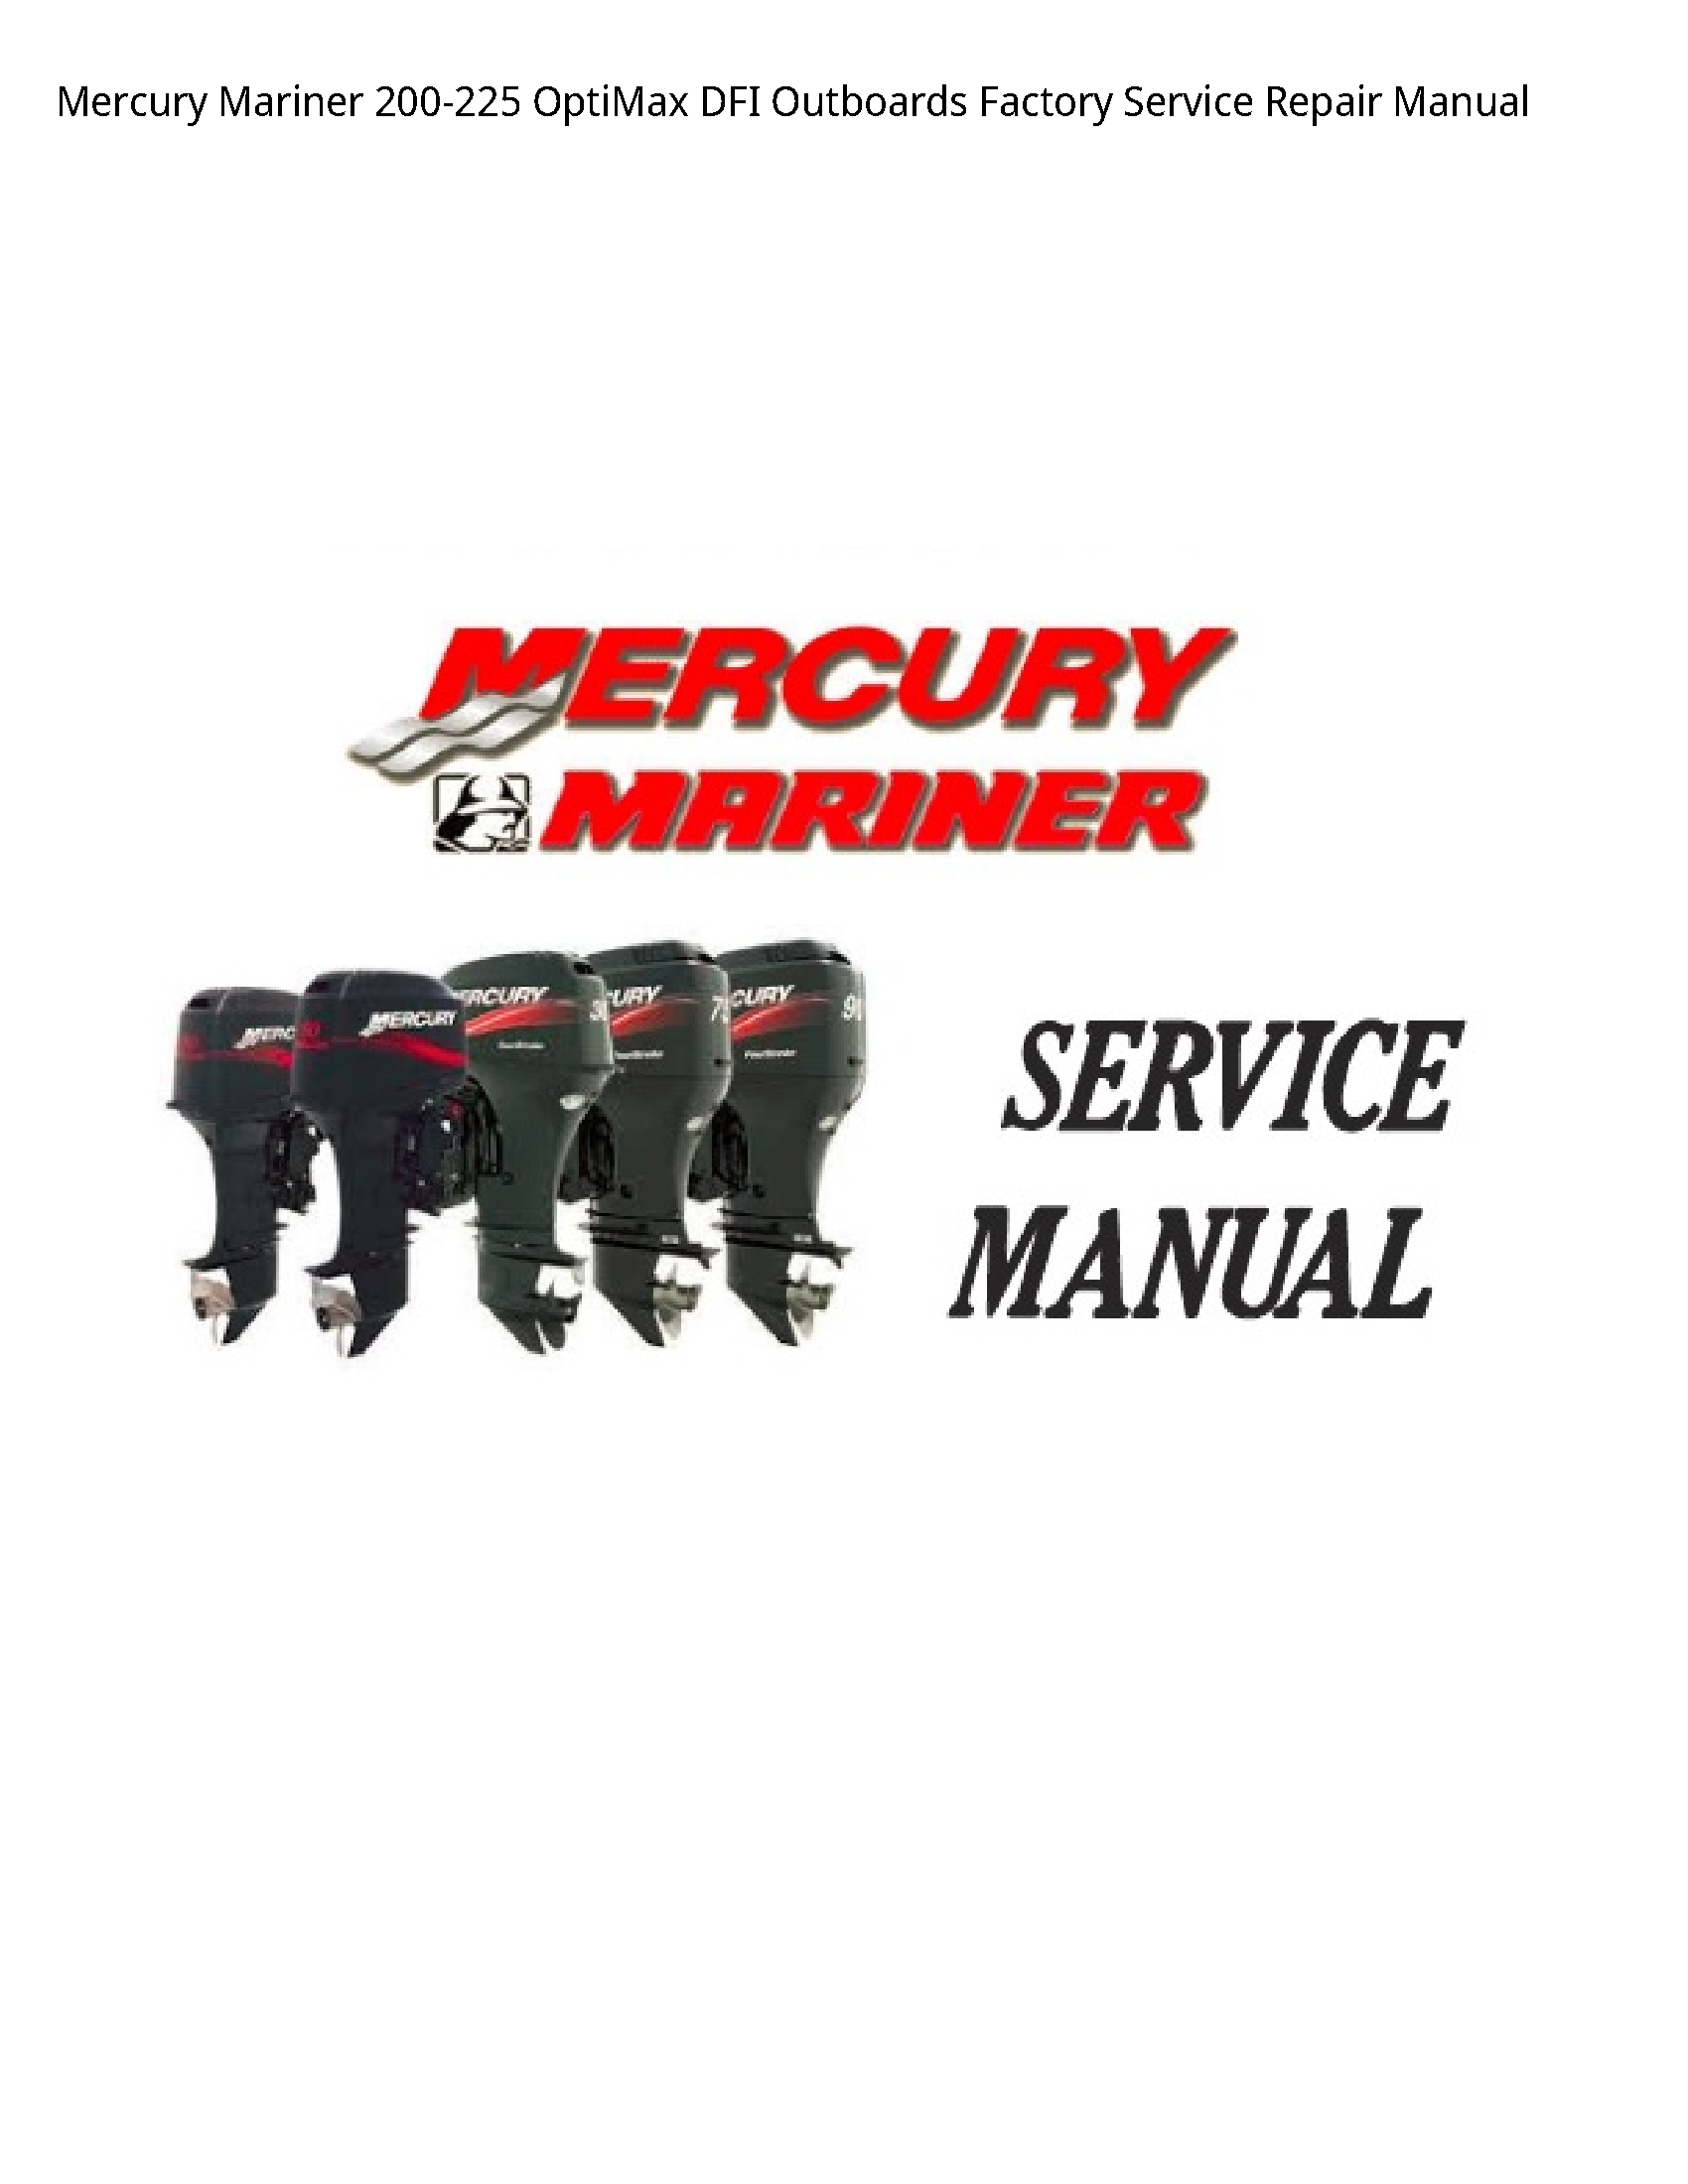 Mercury Mariner 200-225 OptiMax DFI Outboards Factory manual